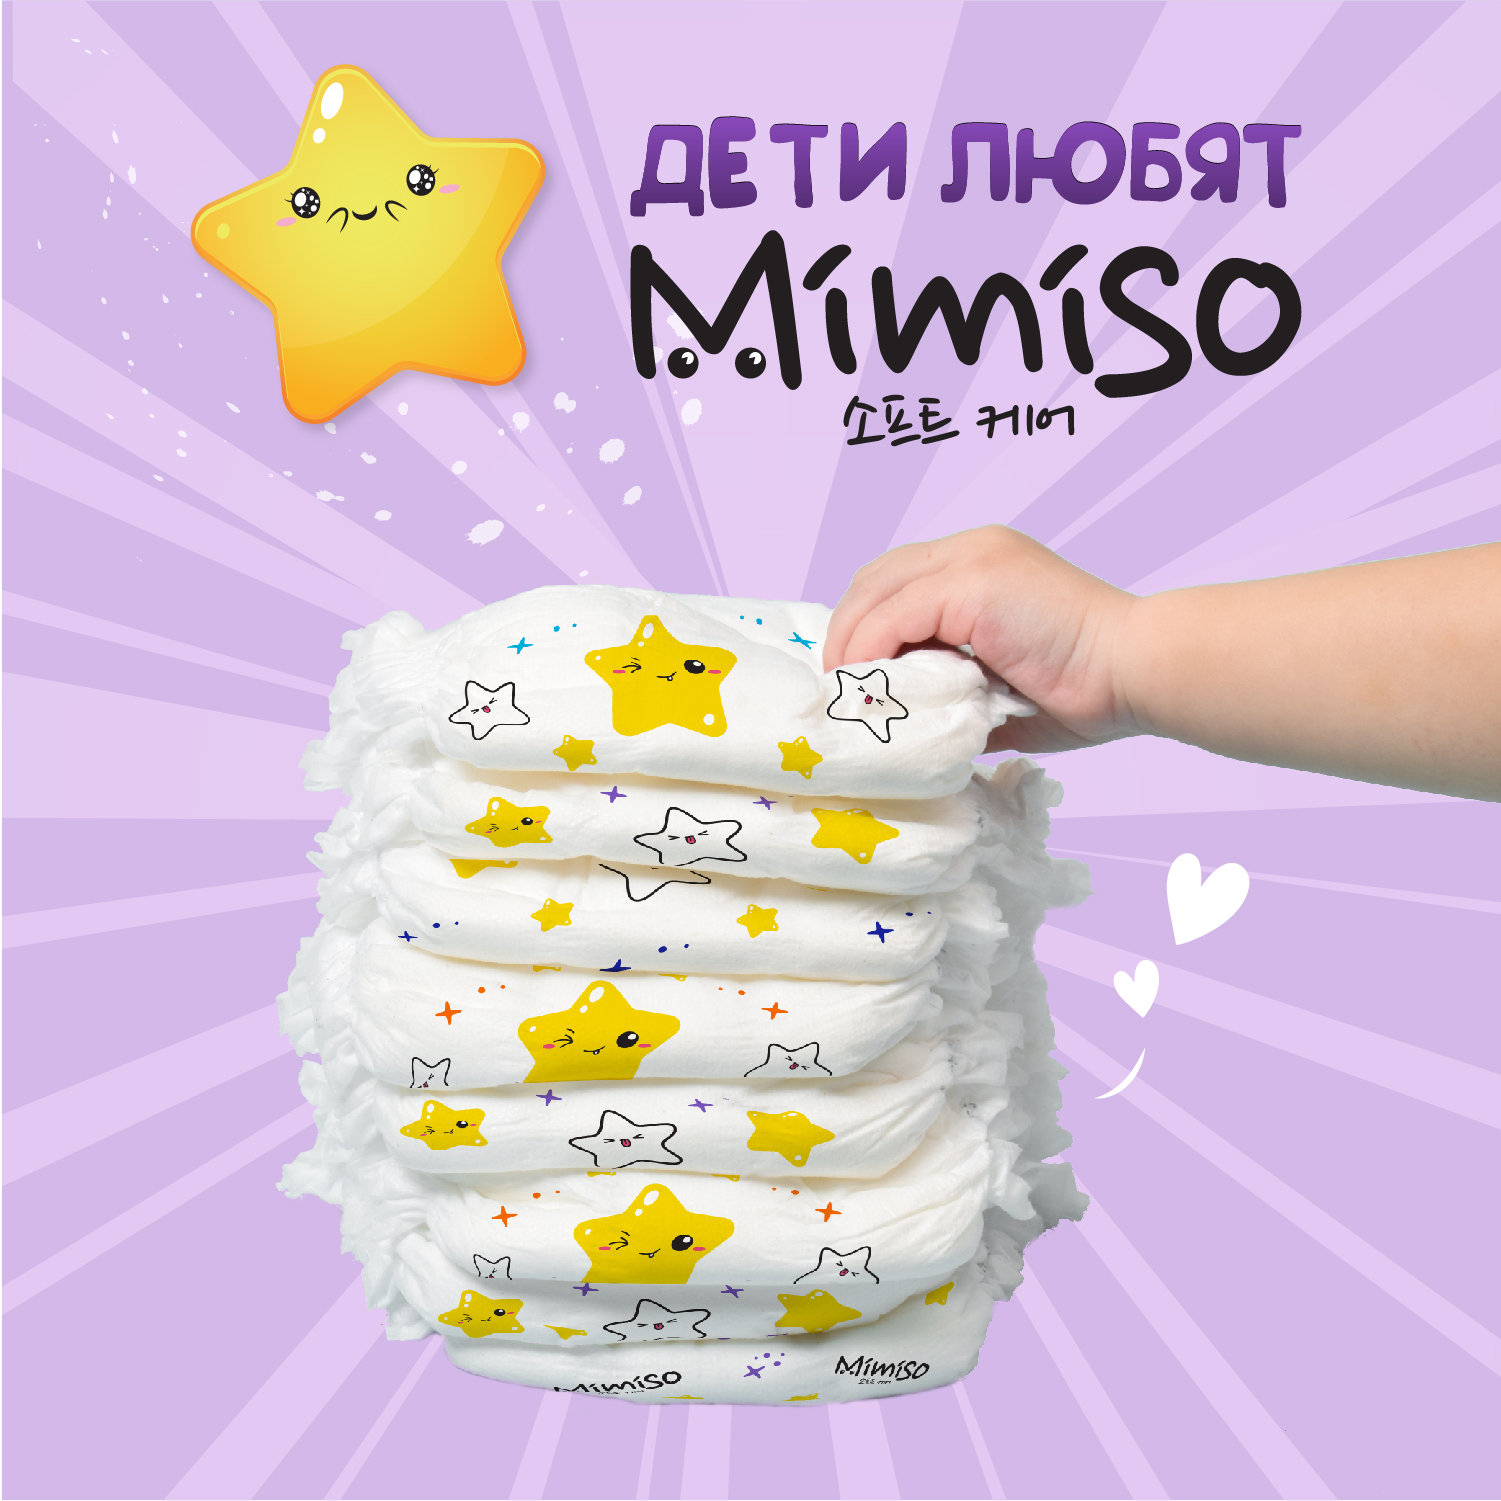 Трусики Mimiso одноразовые для детей 6/XXL 16-25 кг 34шт - фото 6